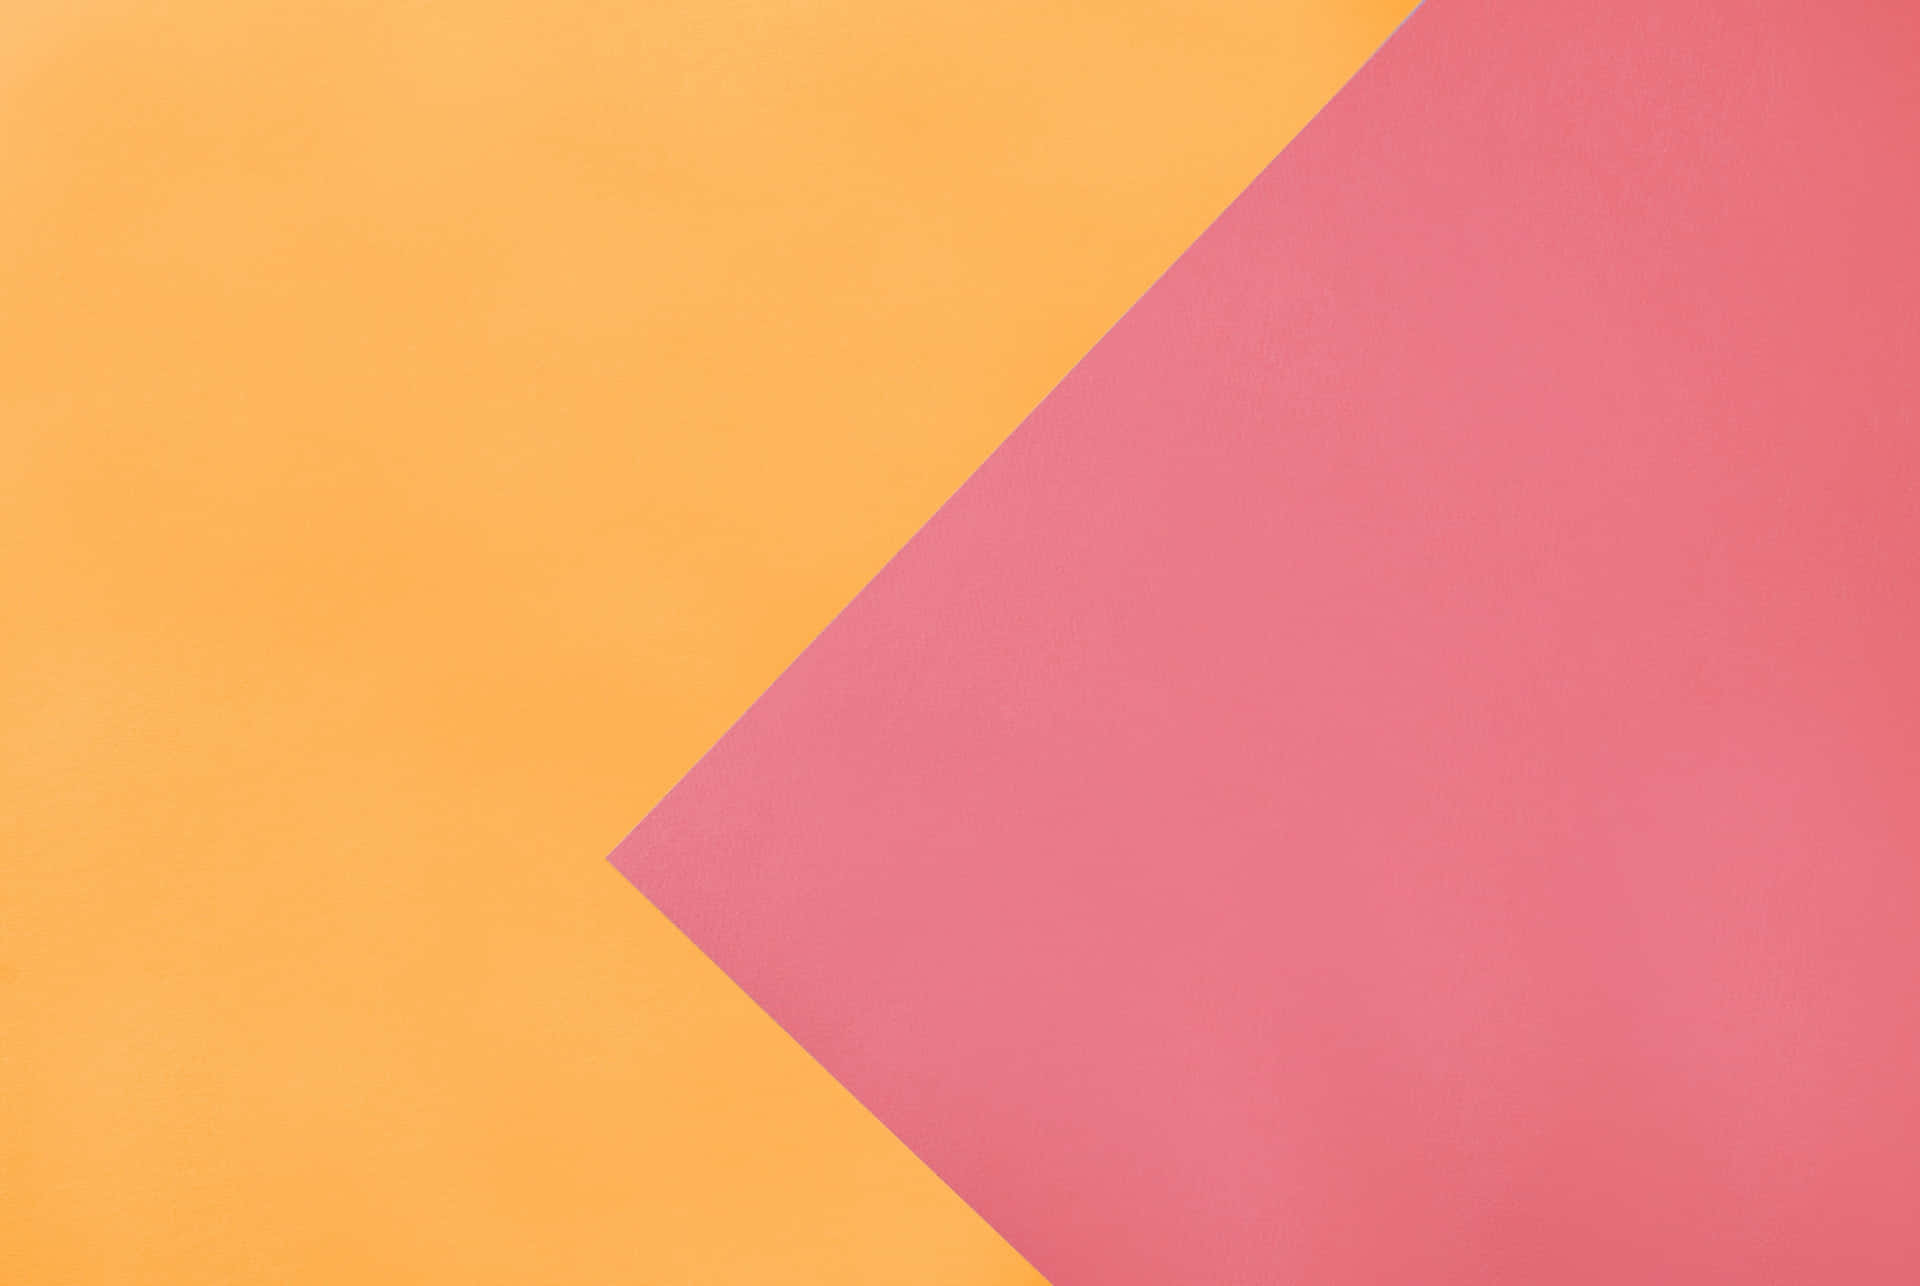 Pinkand Orange Abstract Background Wallpaper